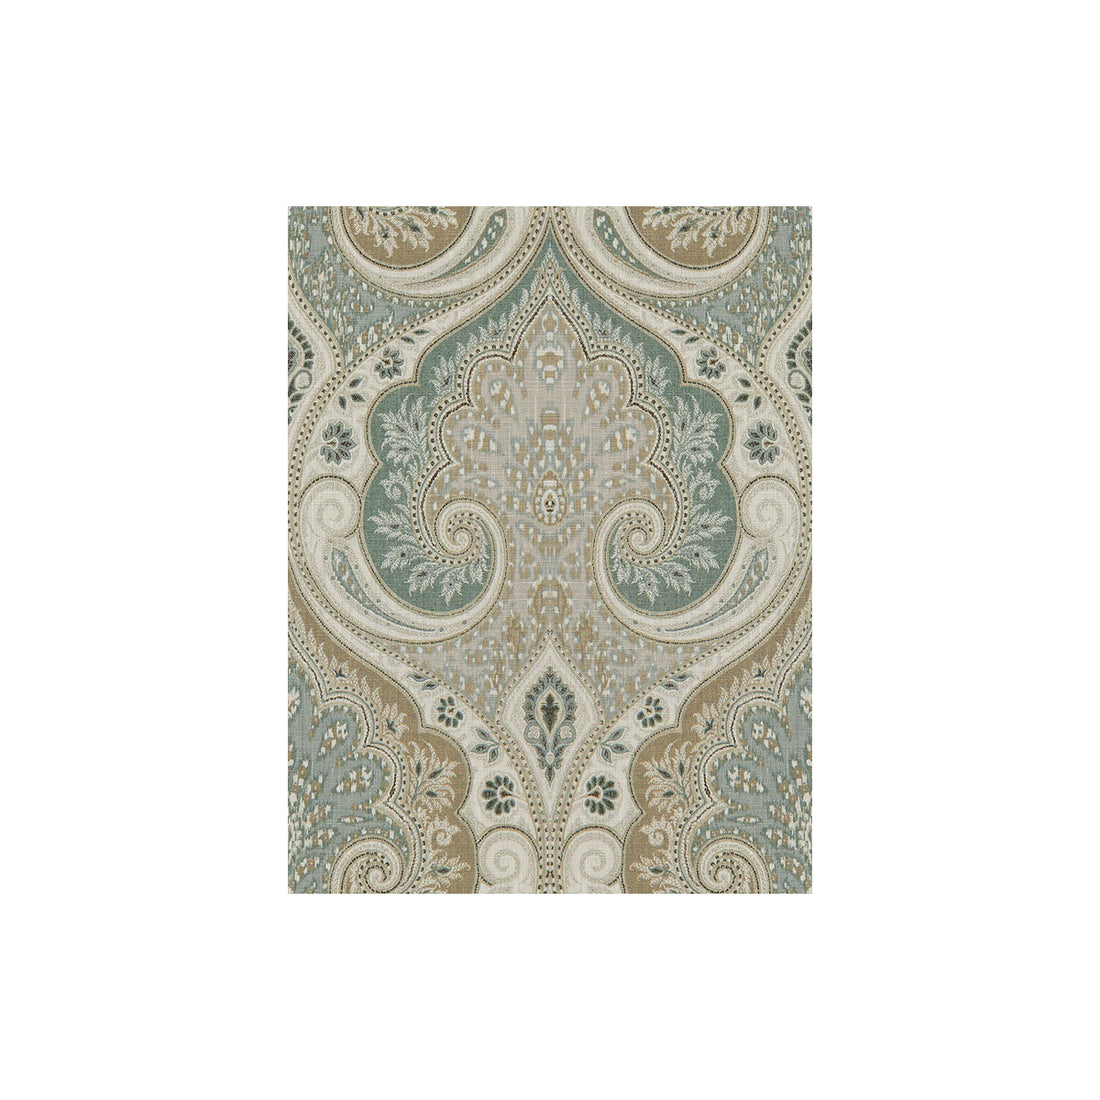 Latika fabric in seafoam color - pattern LATIKA.135.0 - by Kravet Design in the The Echo Design collection